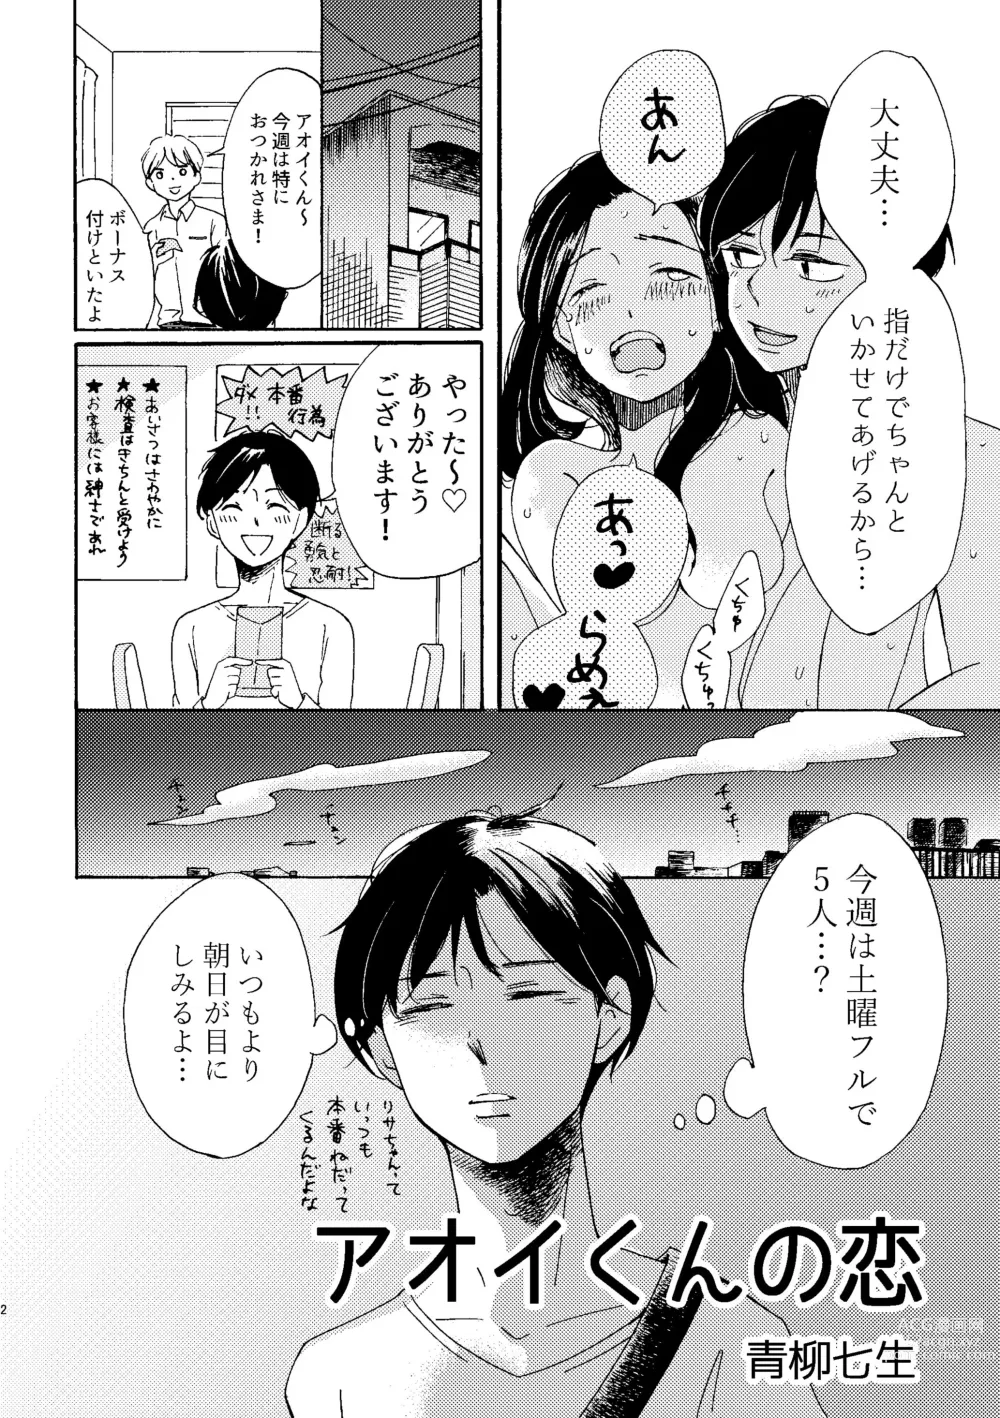 Page 2 of doujinshi Aoi-kun no Koi